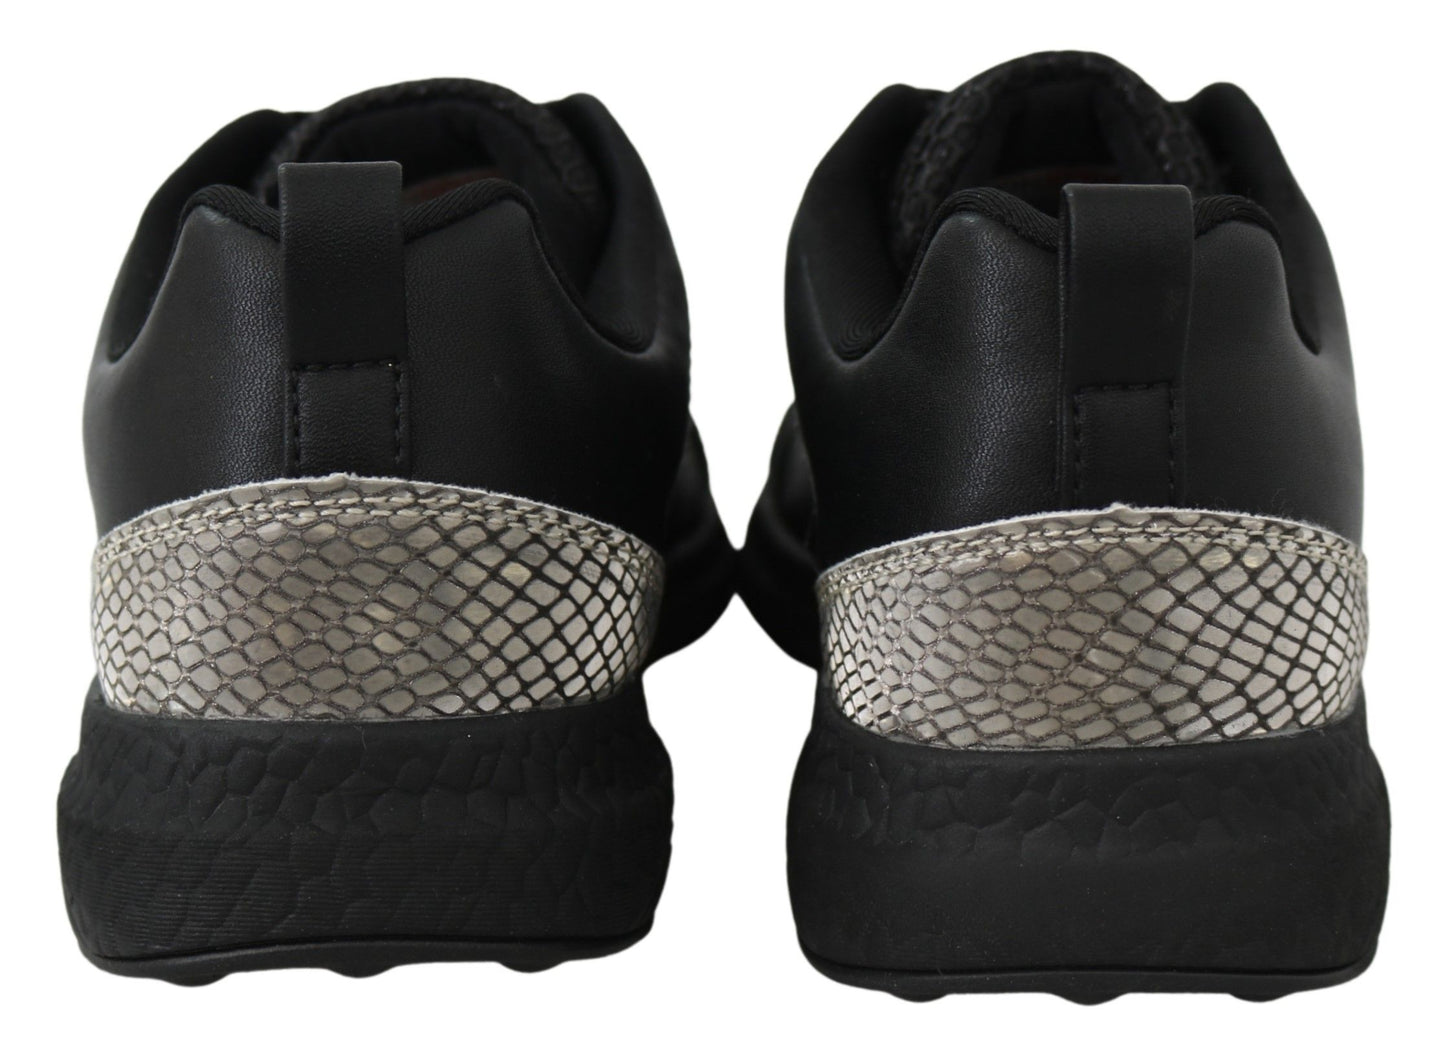 Plein Sport Black Polyester Runner Gisella Sneakers Chaussures